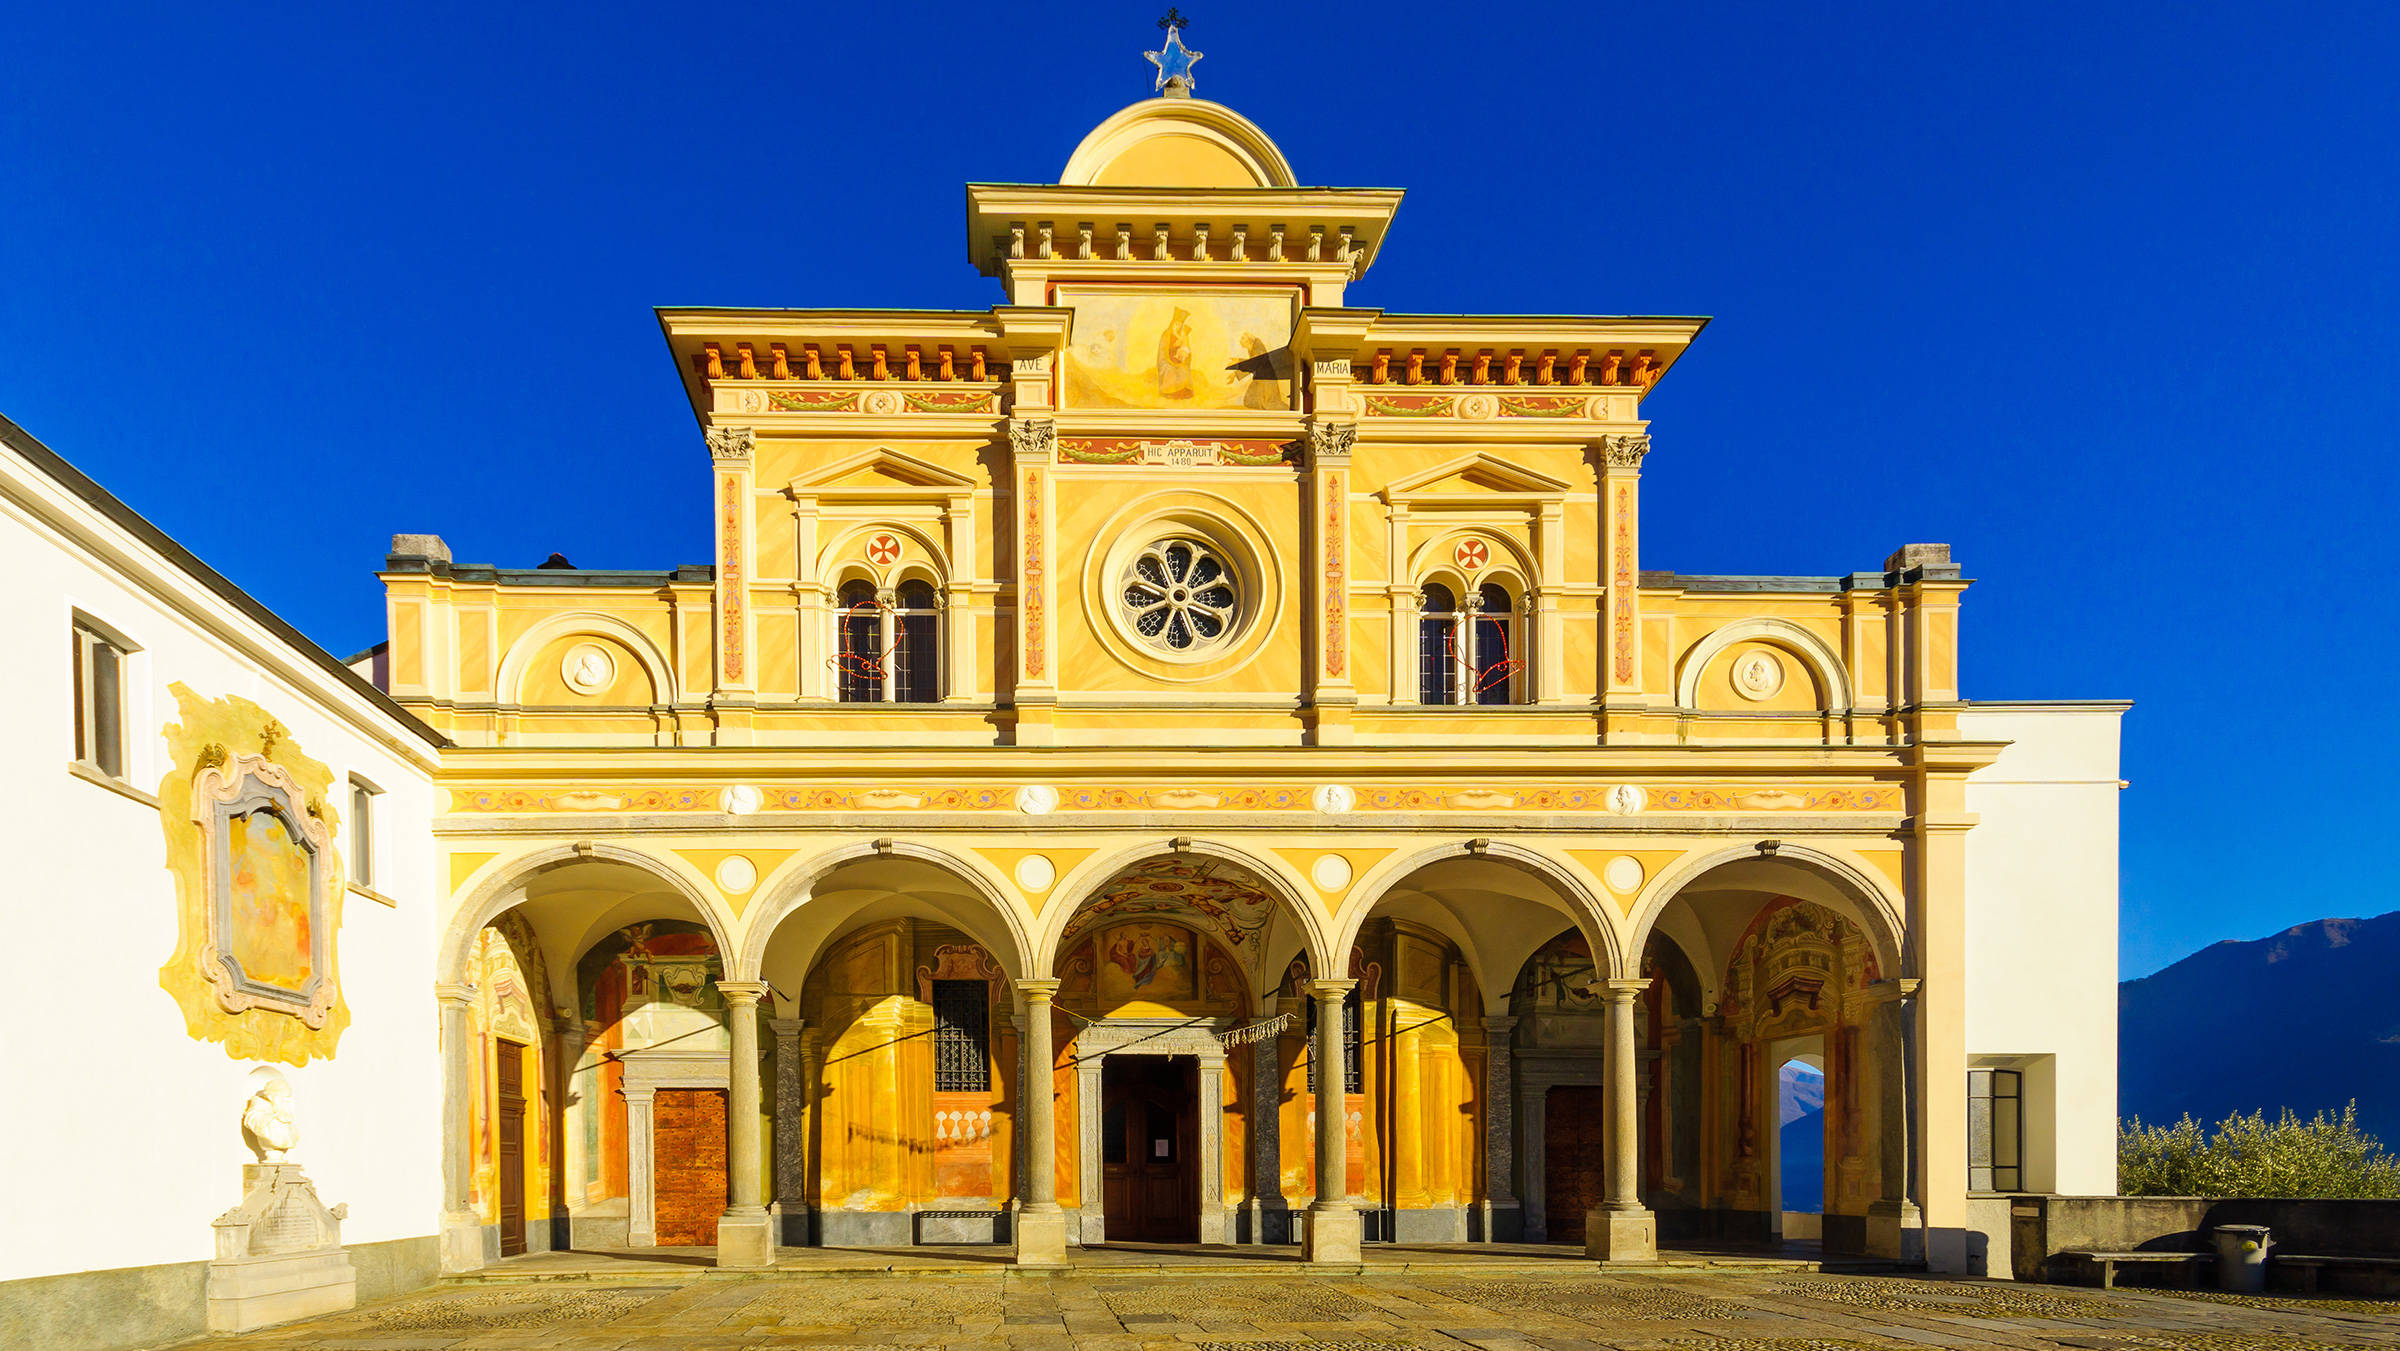 Le sanctuaire de la "Madonna del Sasso" - H4 Hotel Arcadia Locarno - Site internet officiel